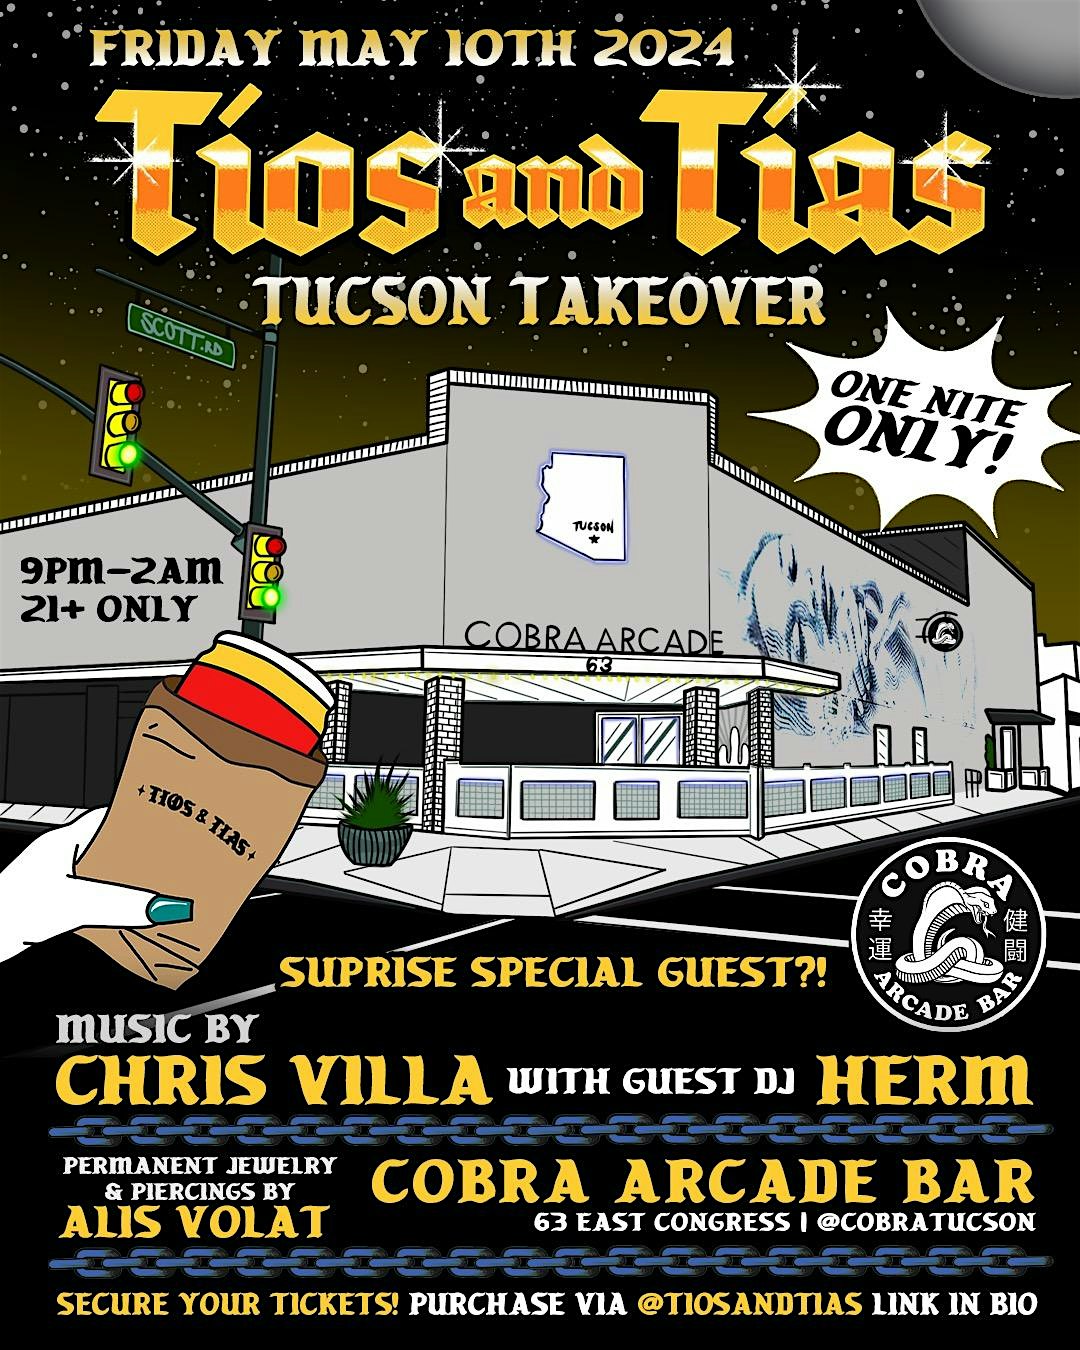 Tios and Tias Tucson Takeover at Cobra Arcade Bar!